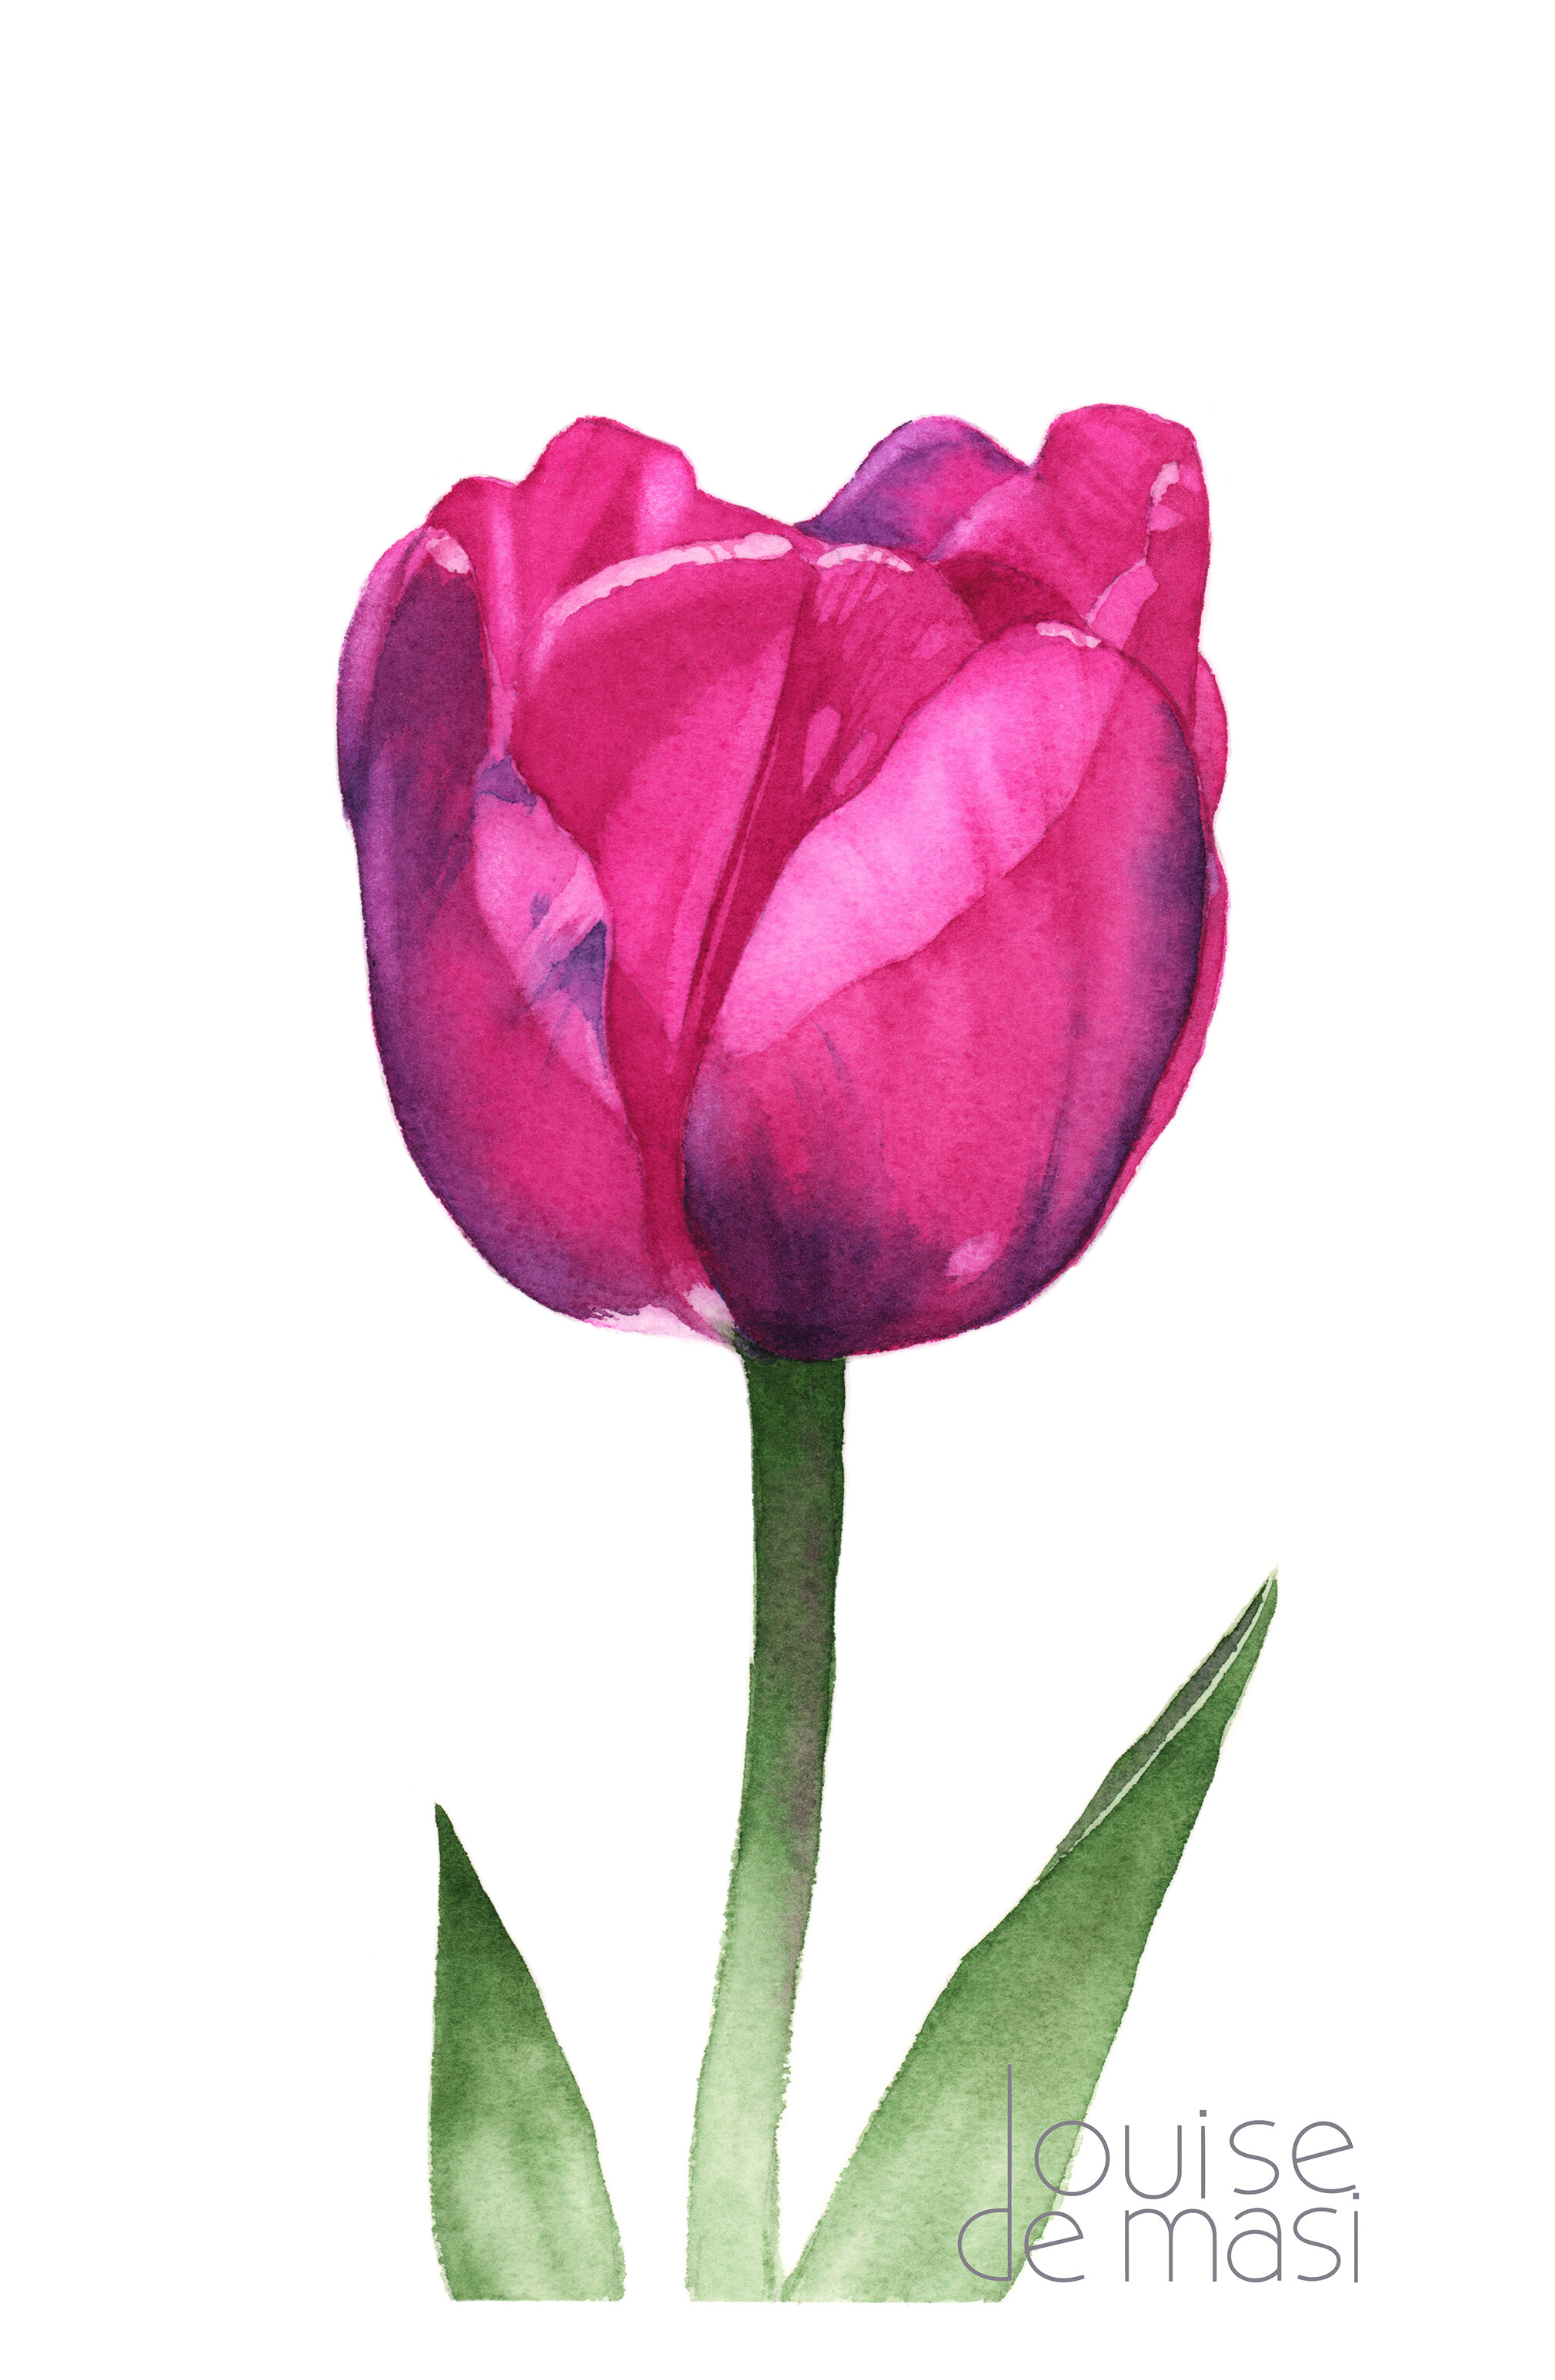 Tulip - beginner to intermediate